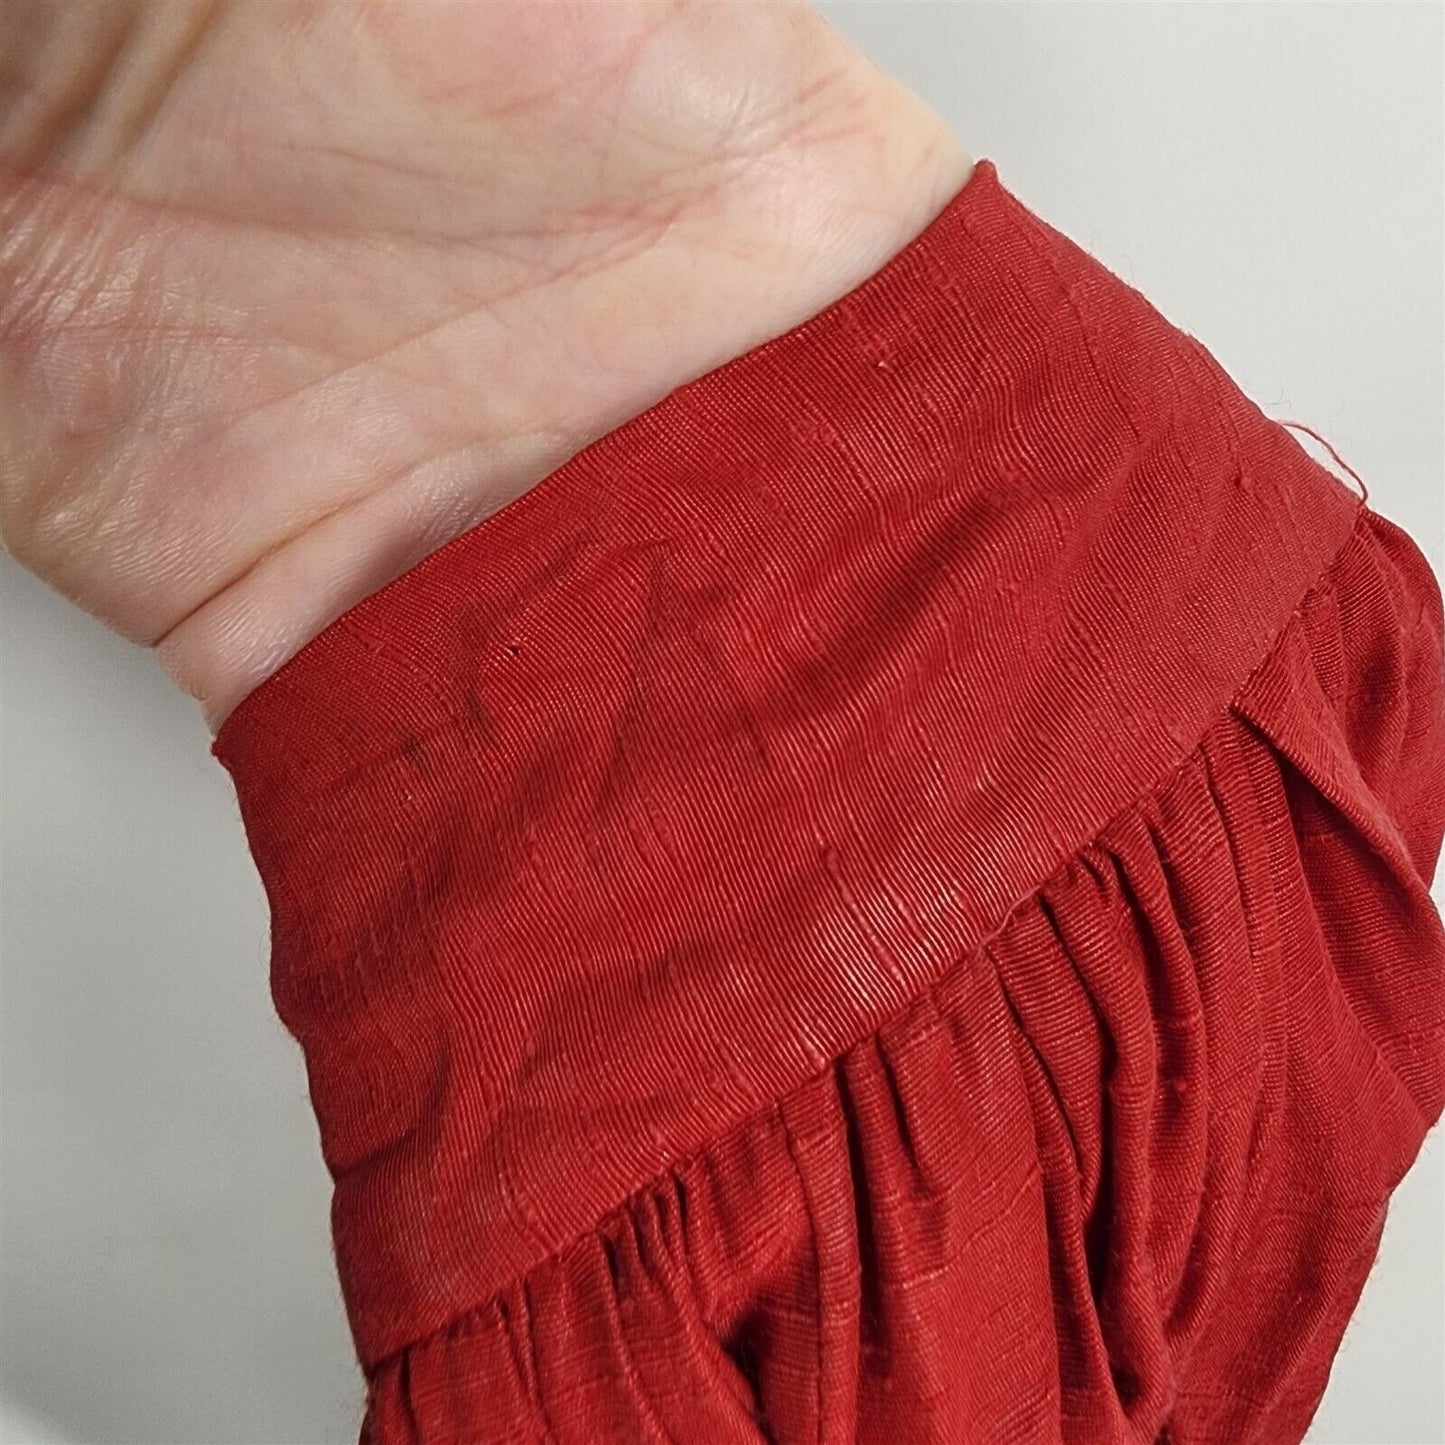 Vintage 1950s Womens Red Skirt Ruffle Trim Size 24" Waist